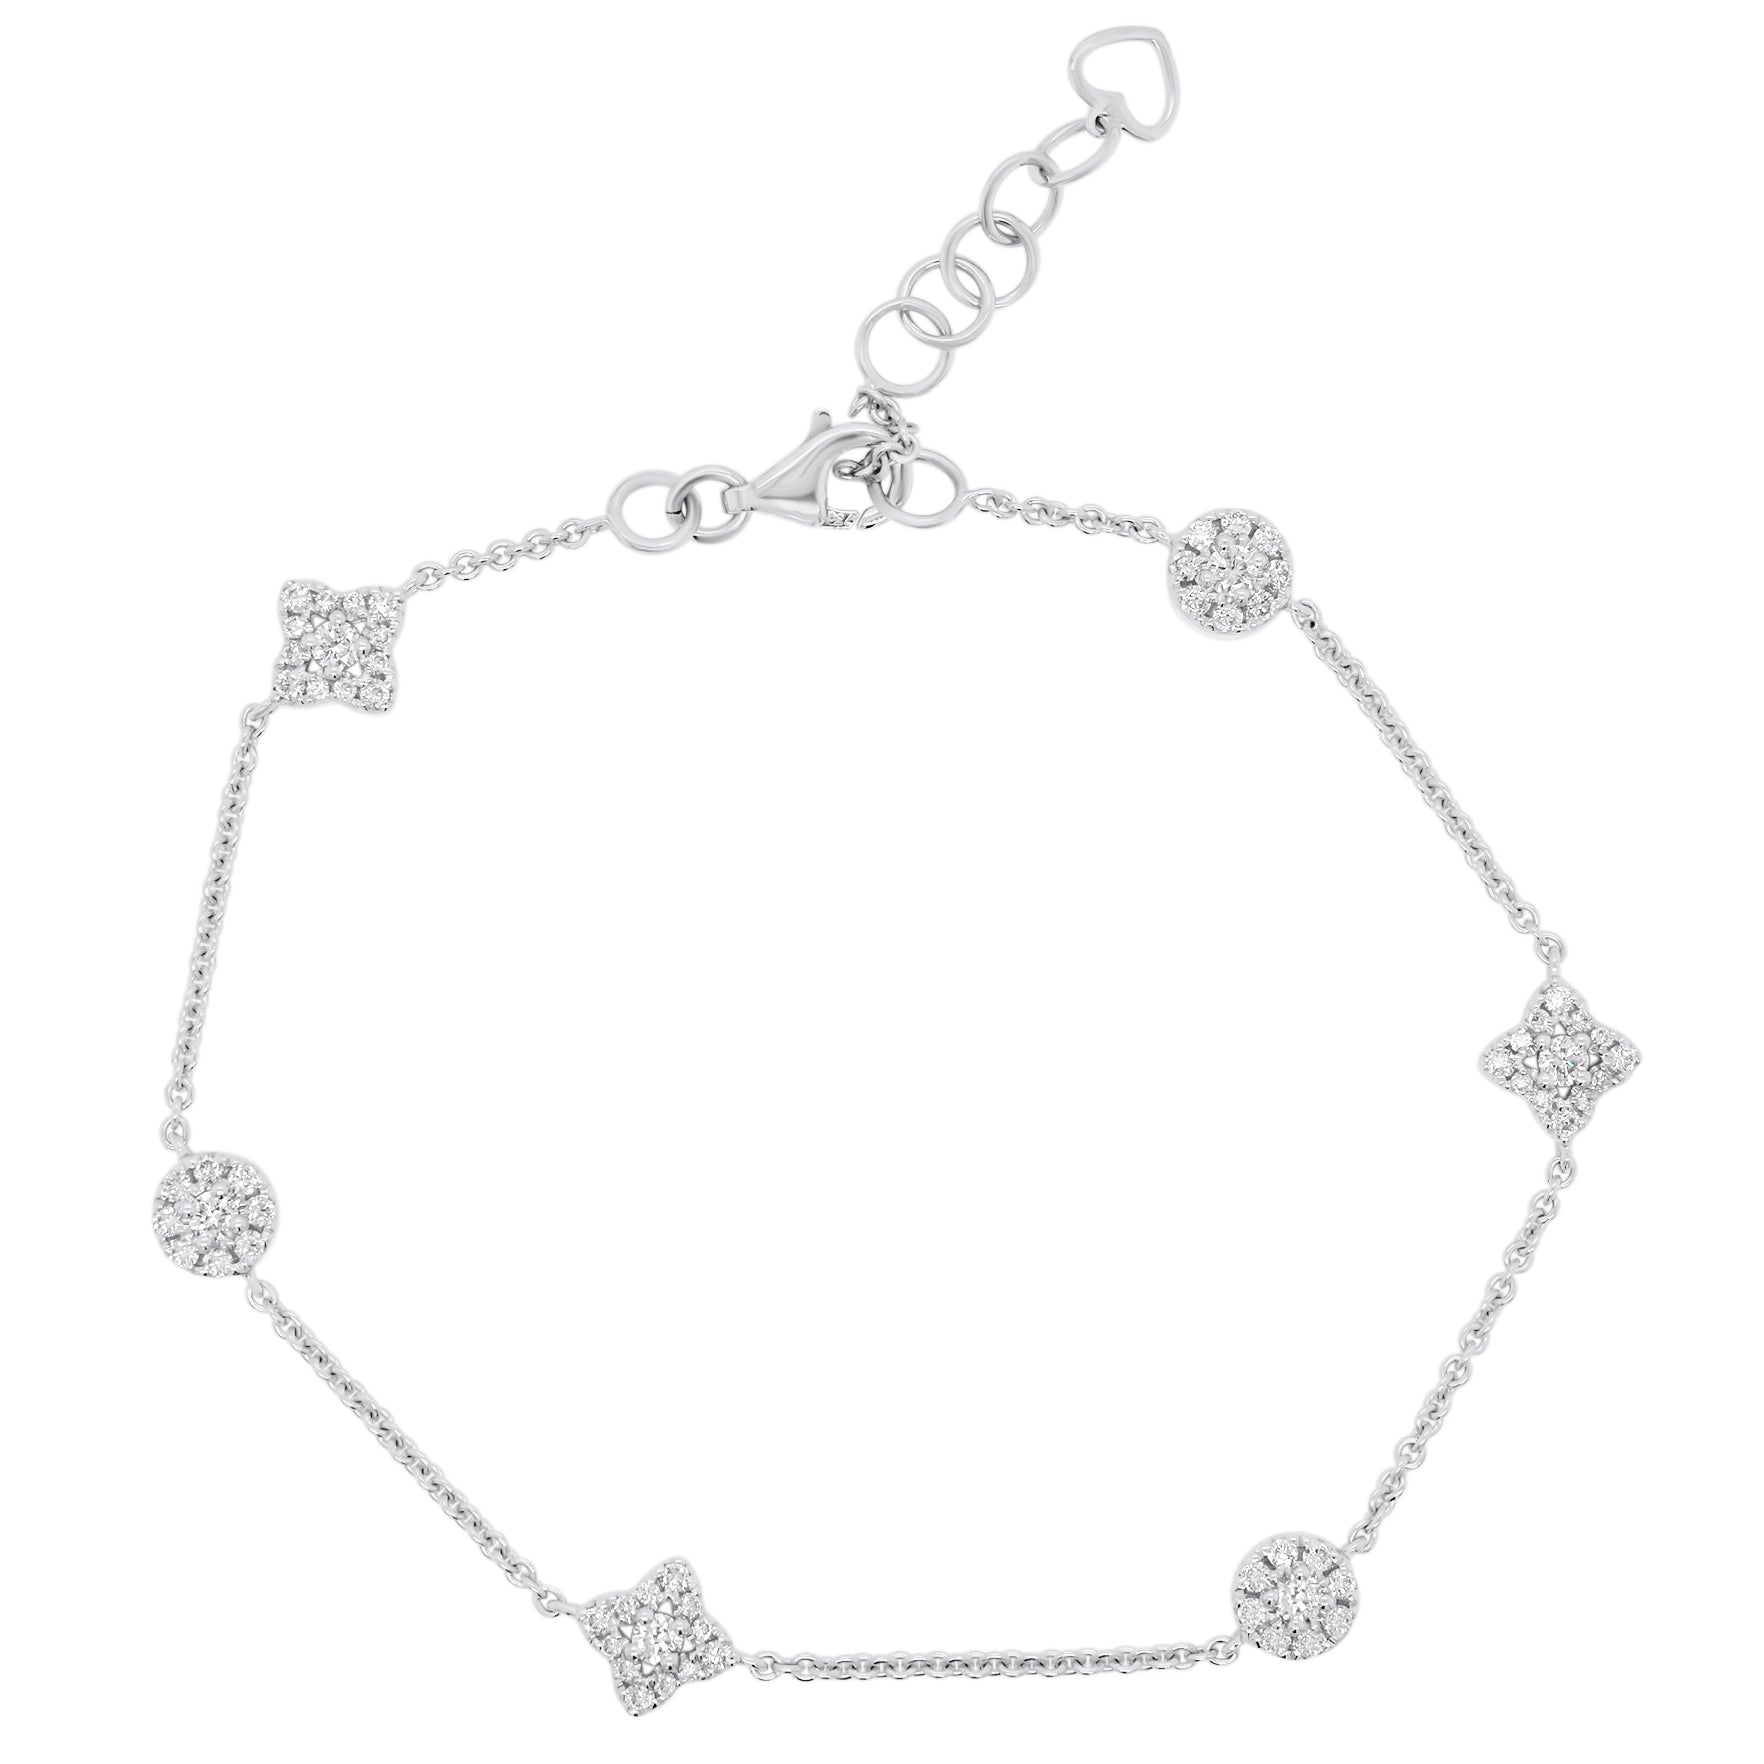 Diamond Clusters Fashion Bracelet - 18K white gold weighing 3.67 grams - 66 round diamonds totaling 0.56 carats